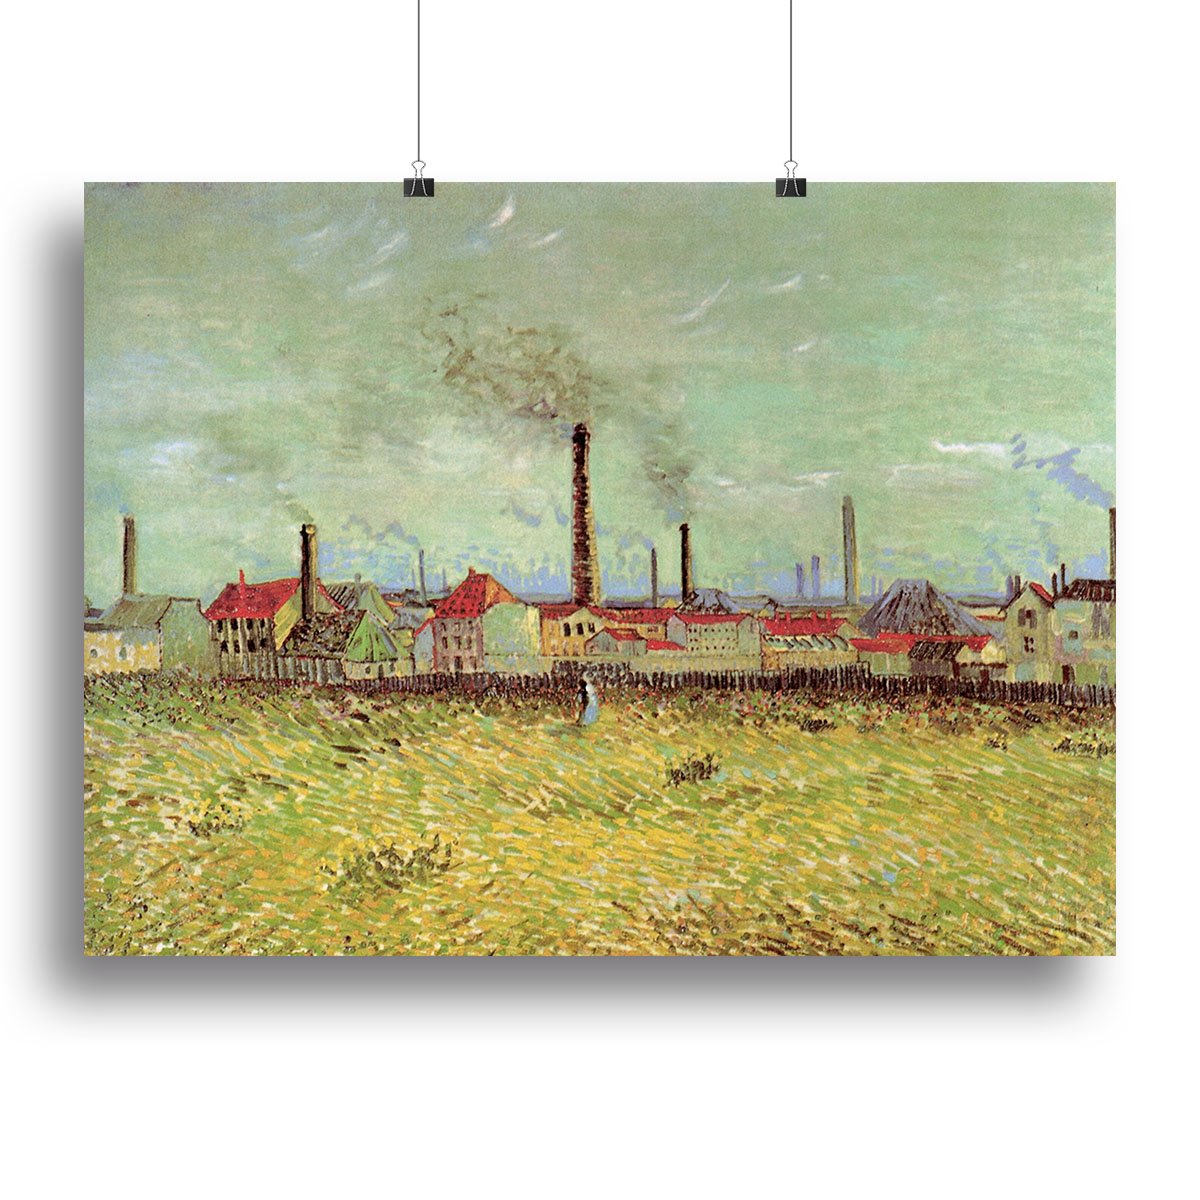 Corner of Voyer d Argenson Park at Asnieres 2 by Van Gogh Canvas Print or Poster